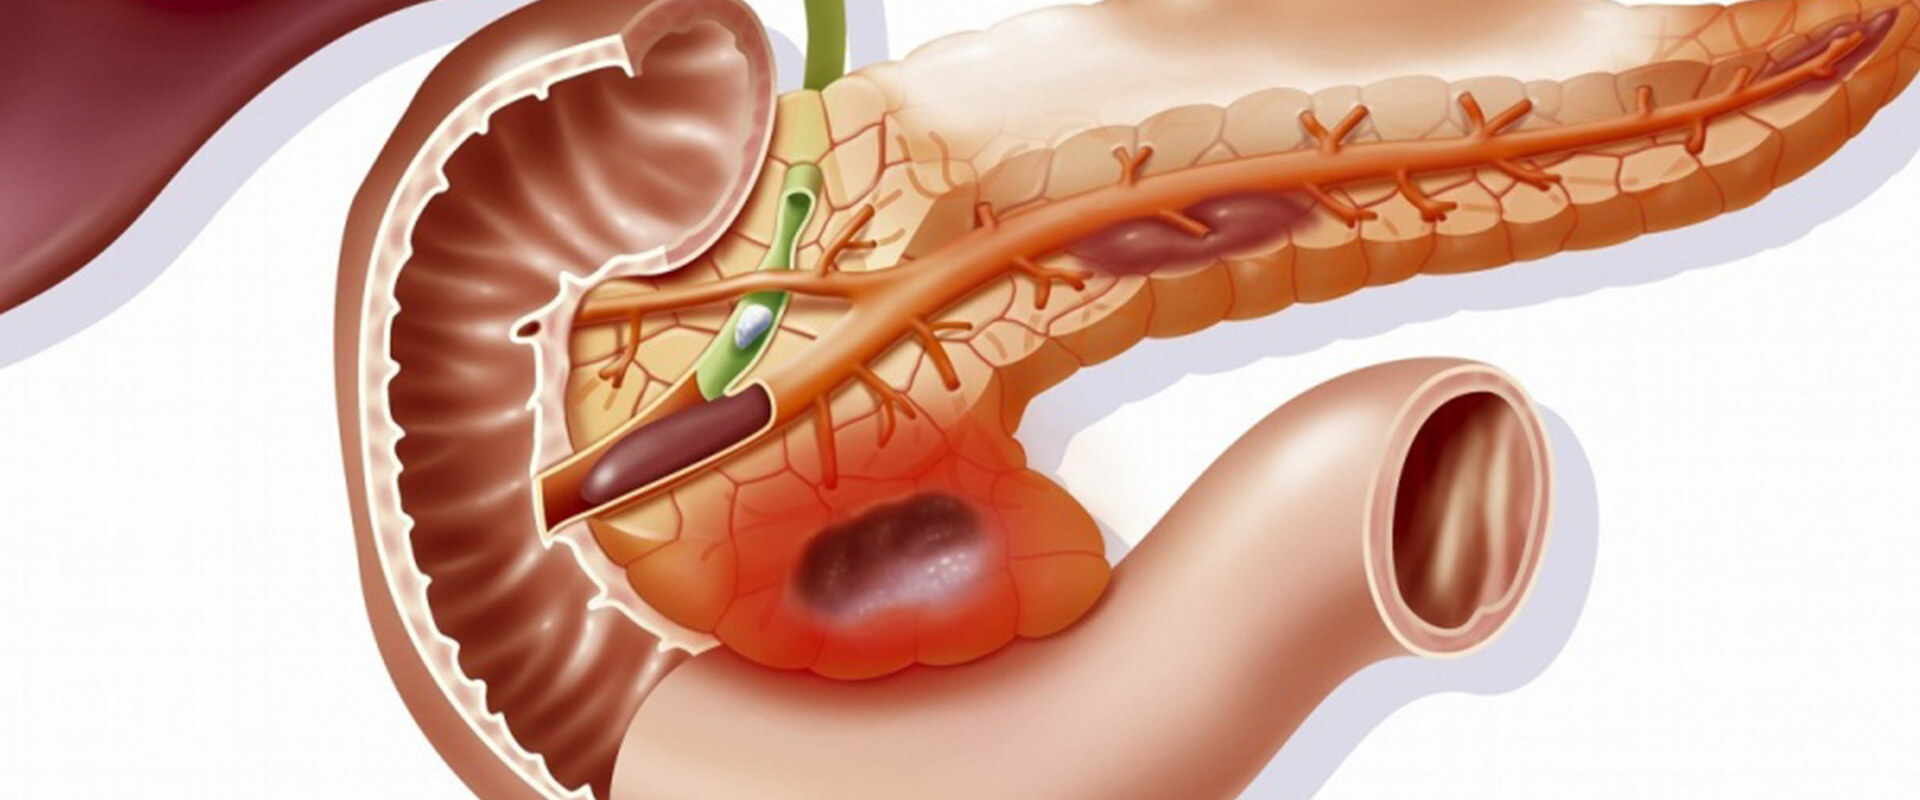 Cistos pancreáticos - Dr. Valter Alvarenga